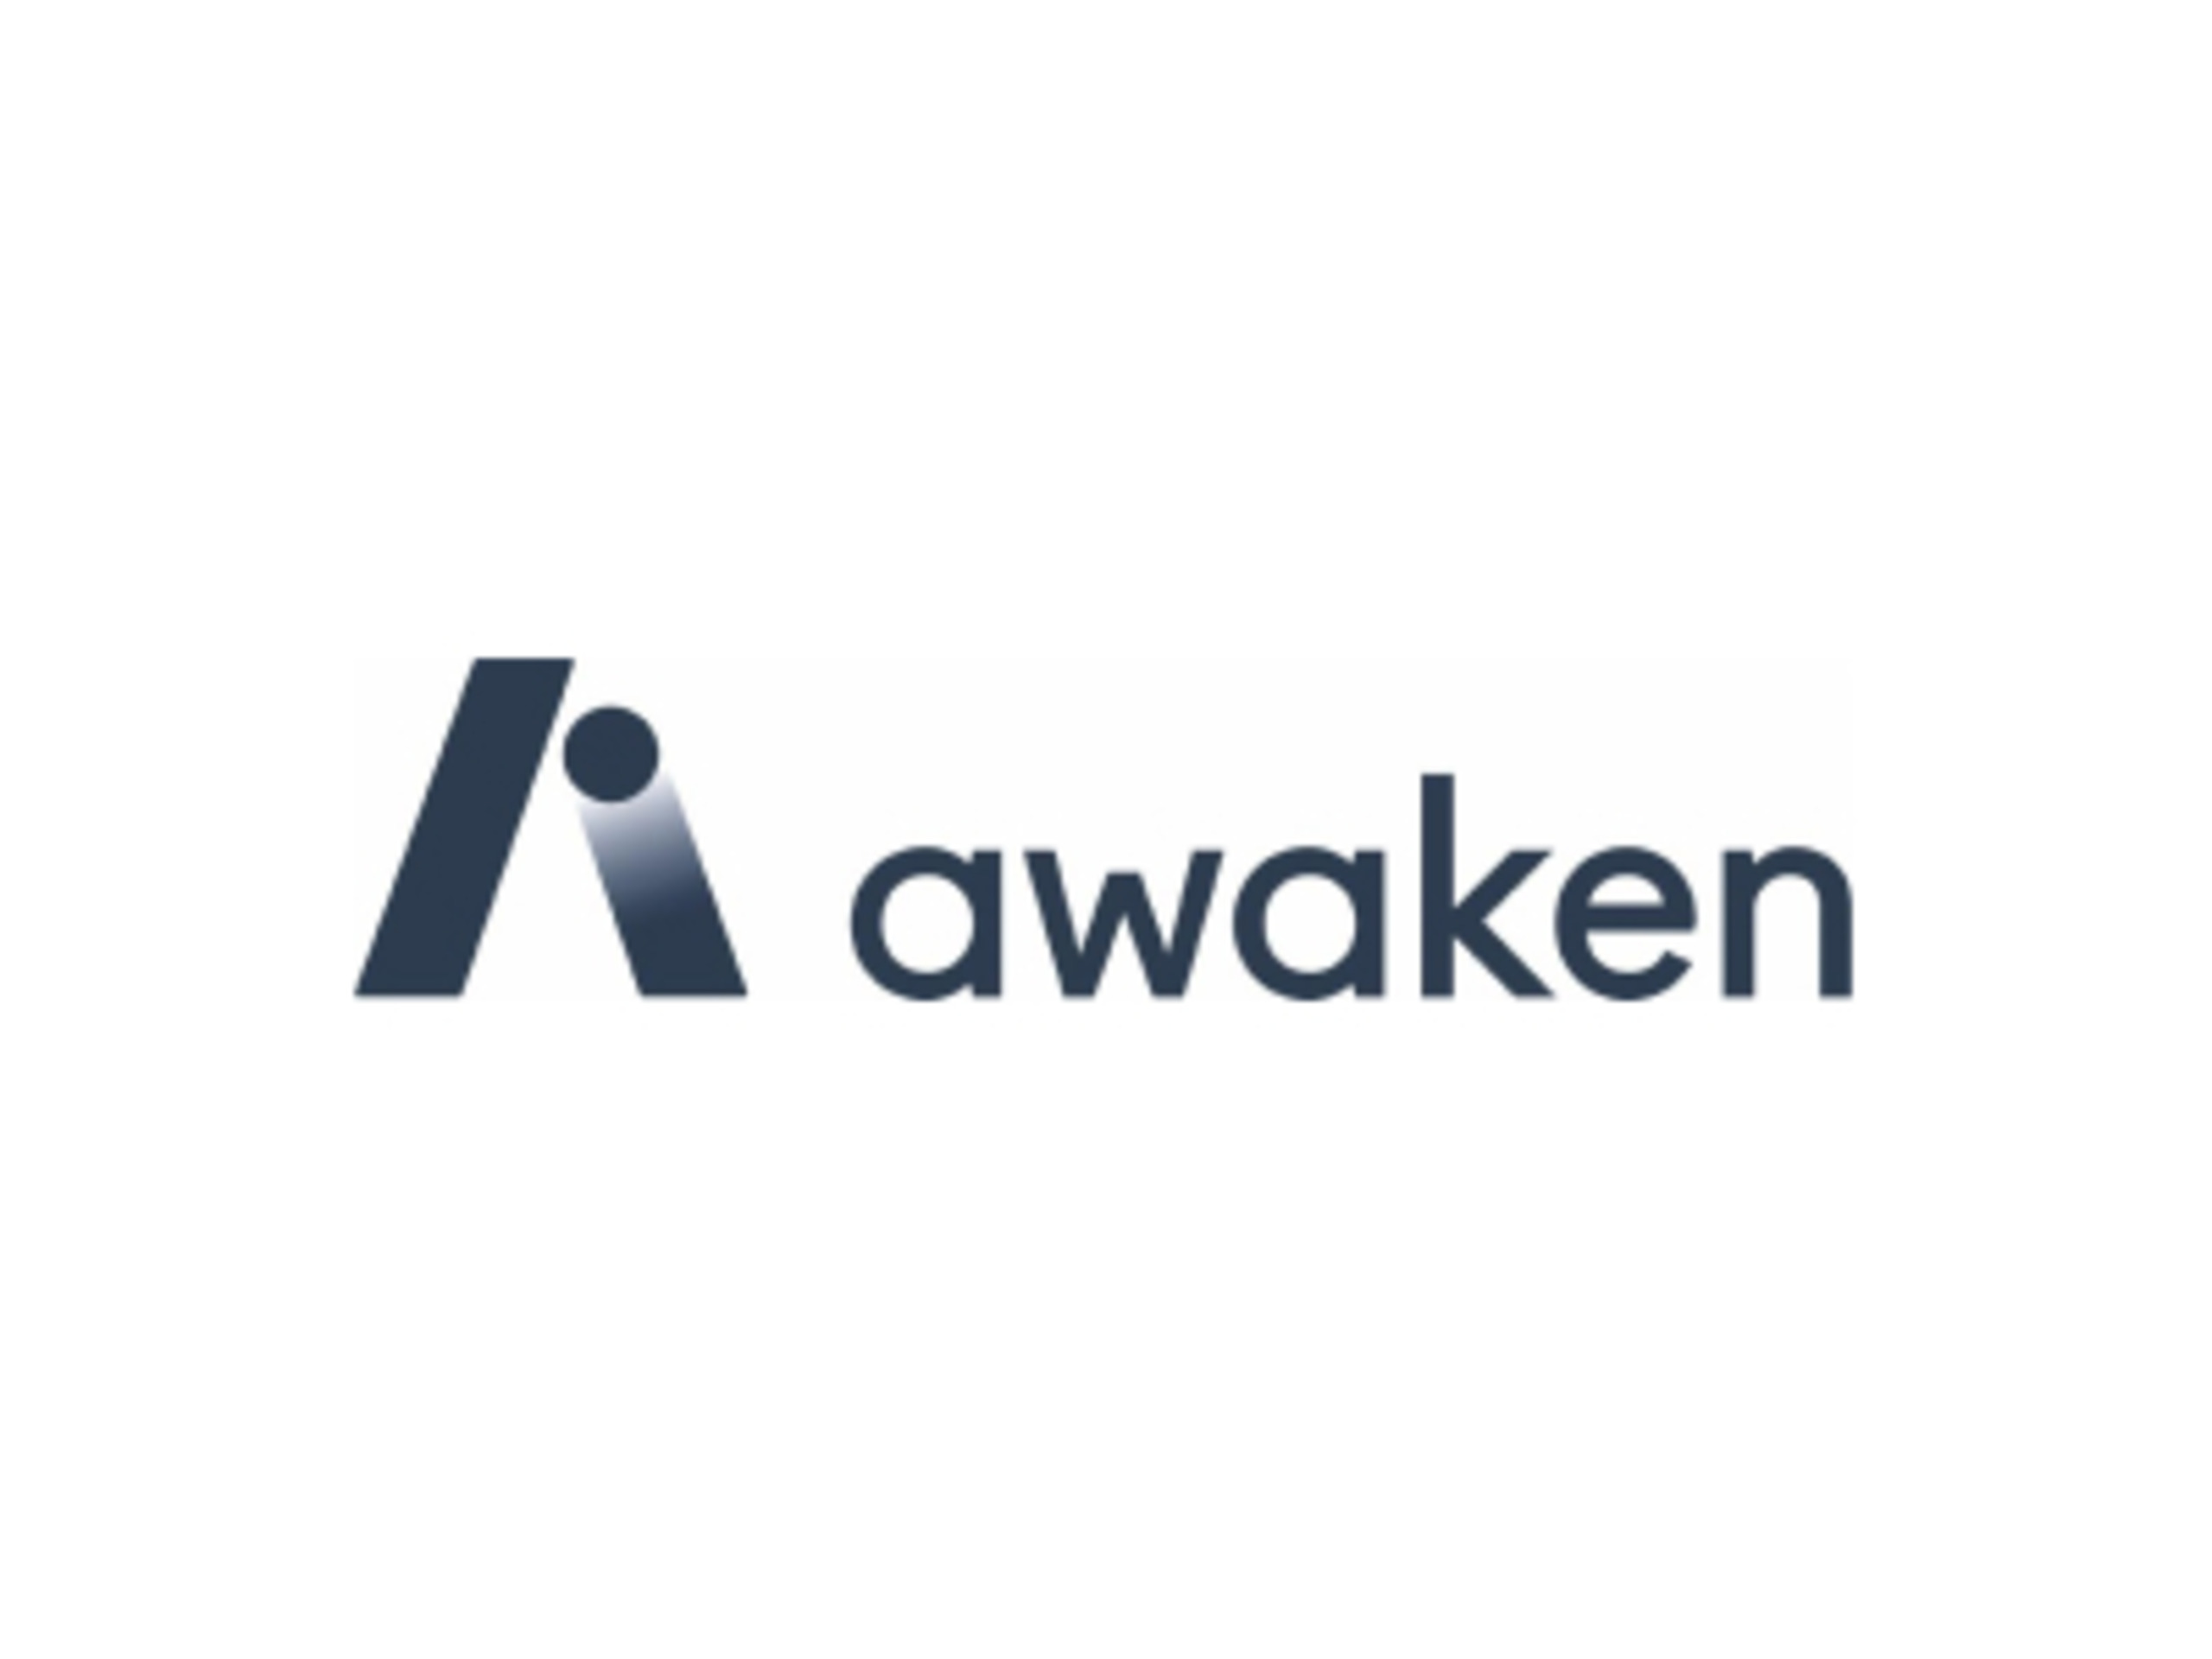 awaken_(1).jpg